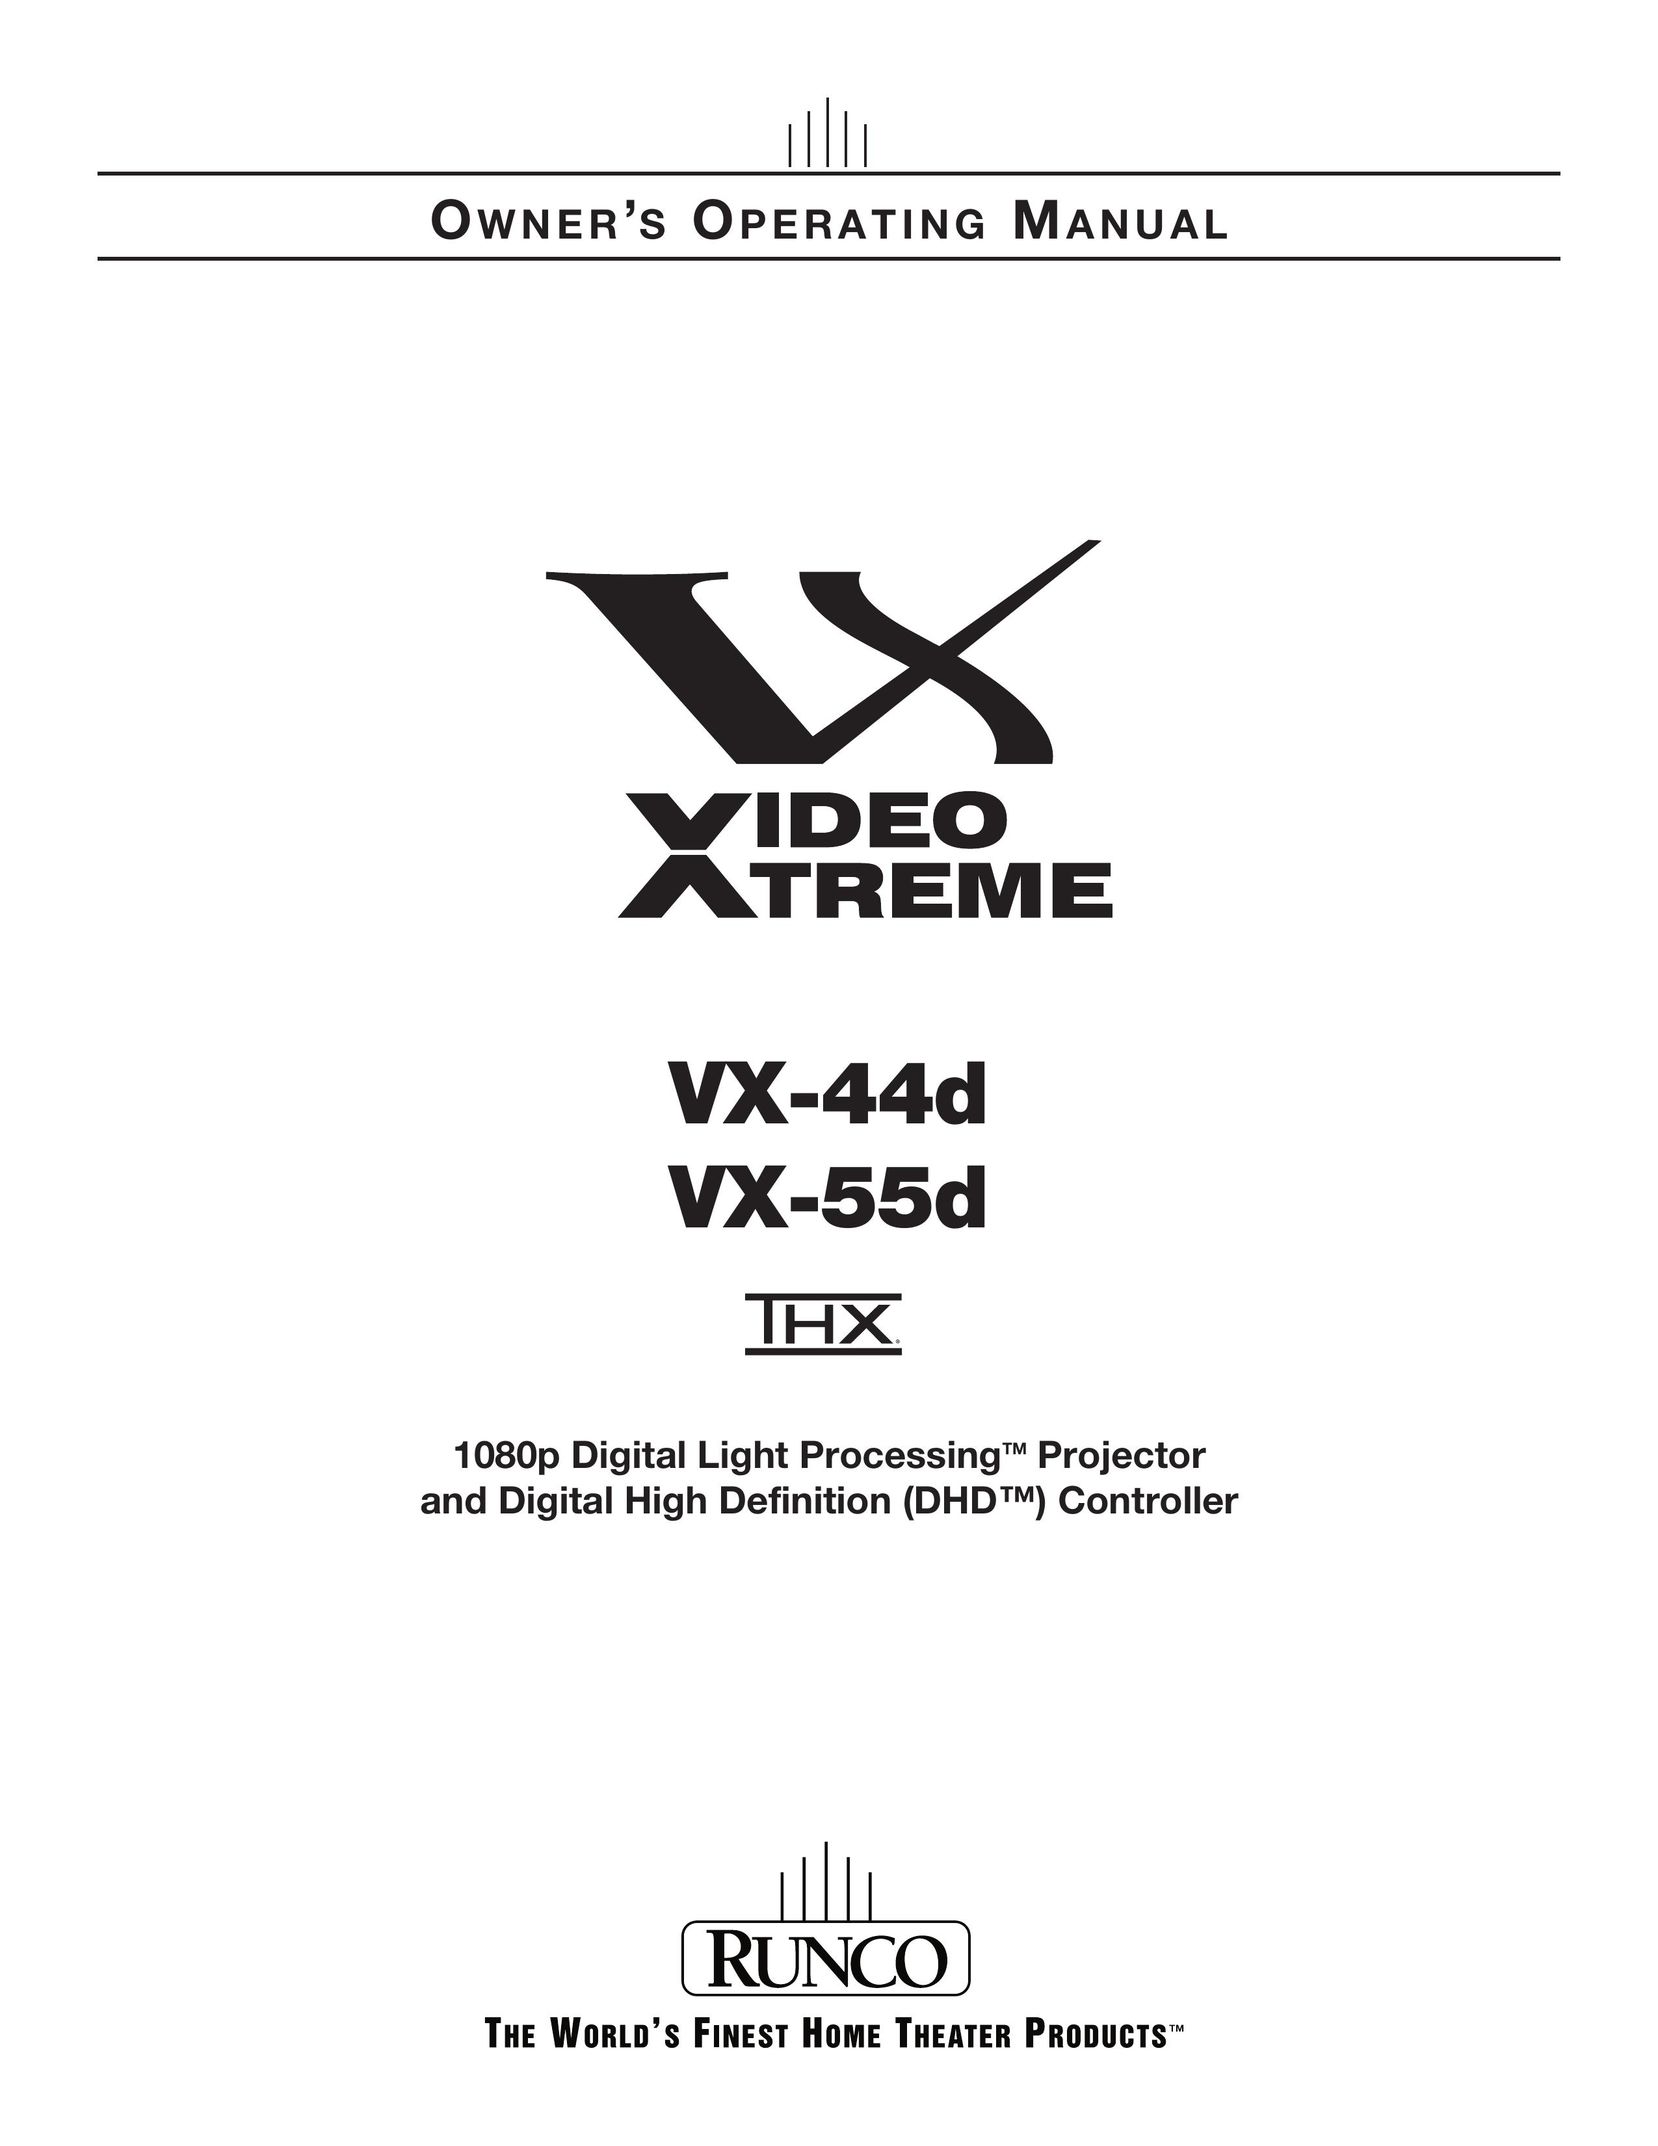 Runco VX-44d Home Theater System User Manual